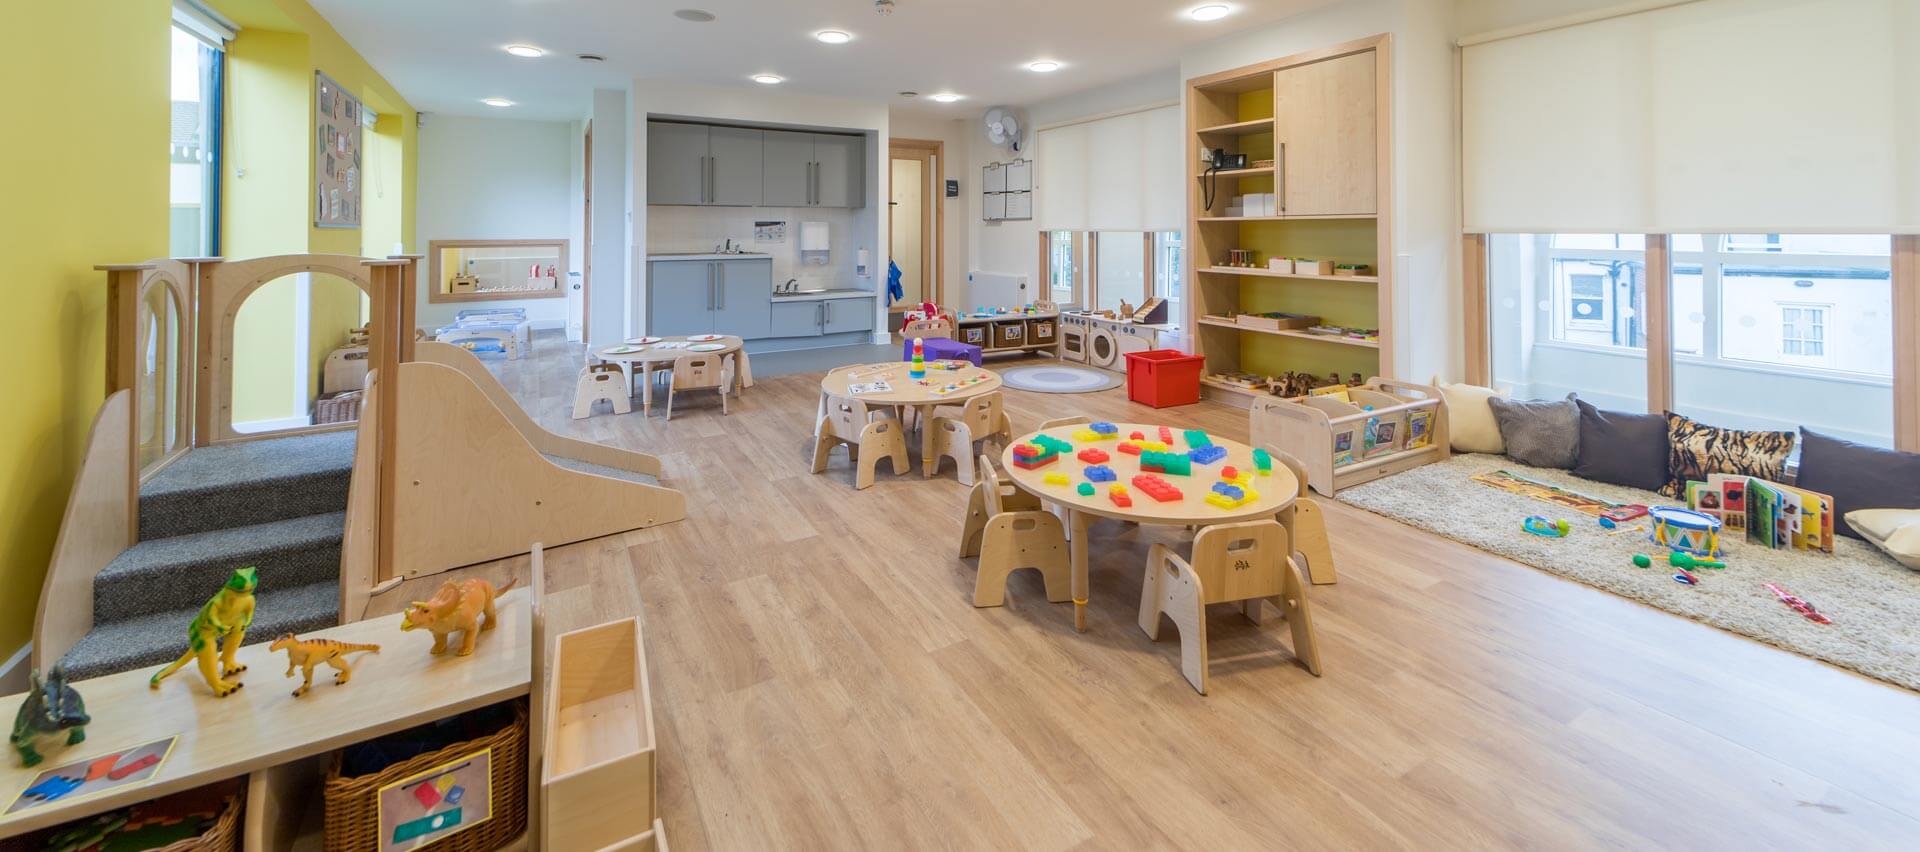 Surbiton Ewell Road Day Nursery and Preschool